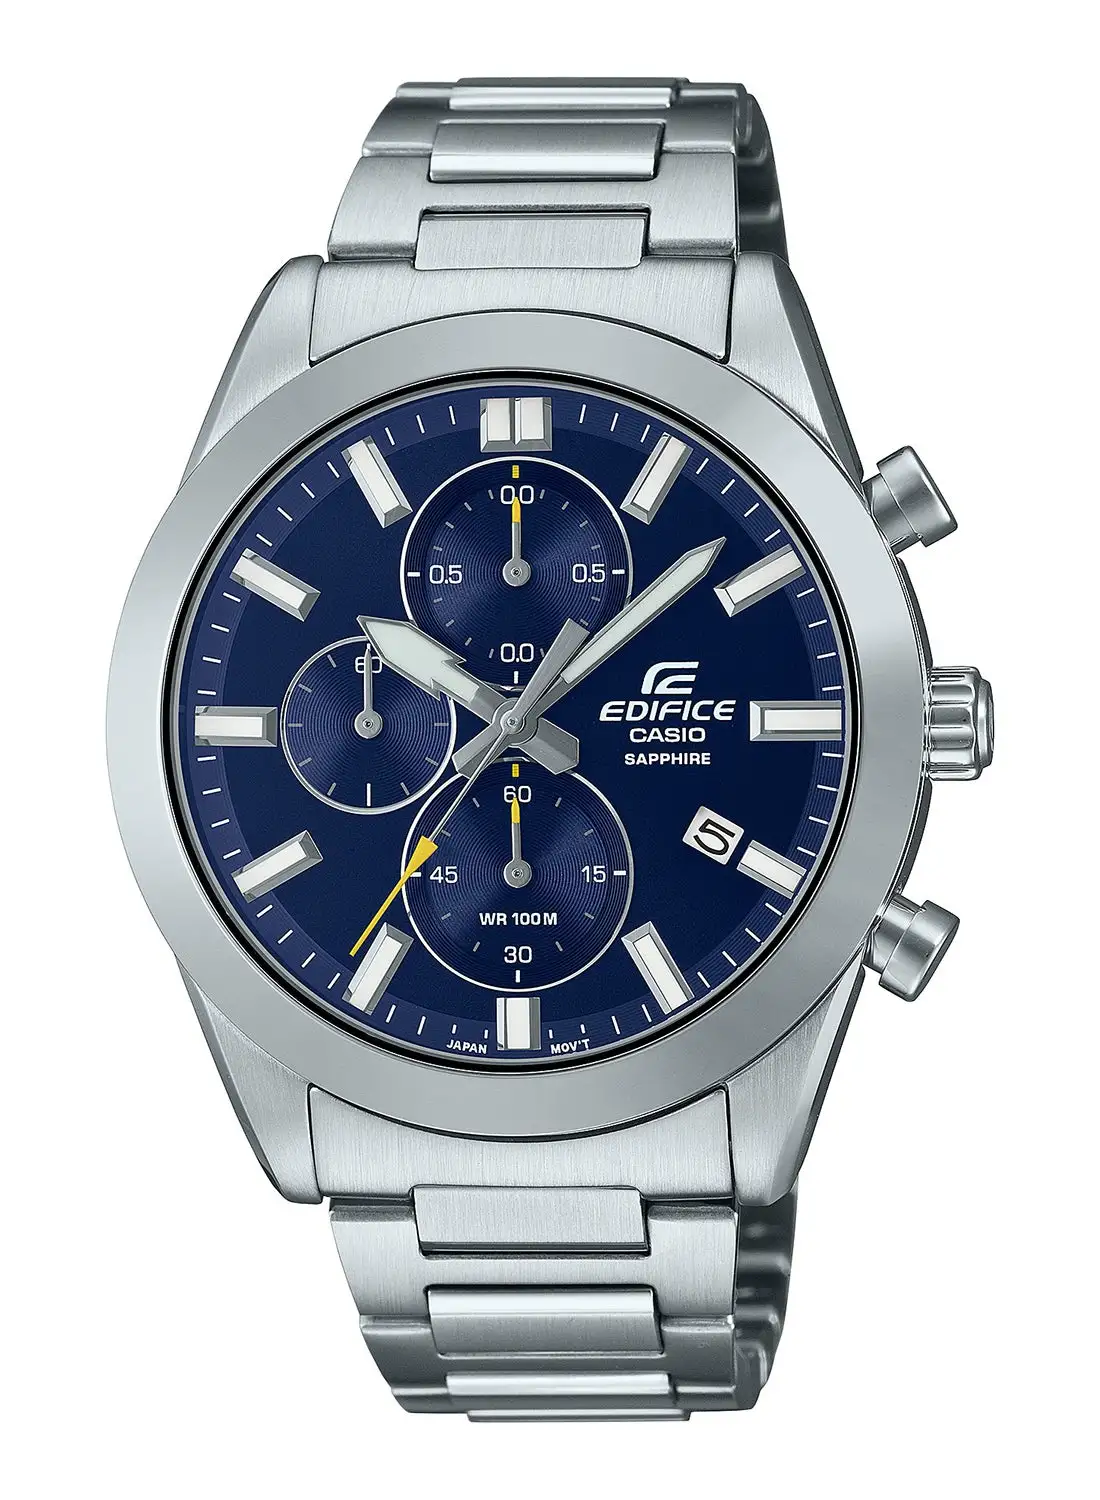 CASIO Men's Analog Stainless Steel Wrist Watch EFB-710D-2AVUDF - 42 Mm